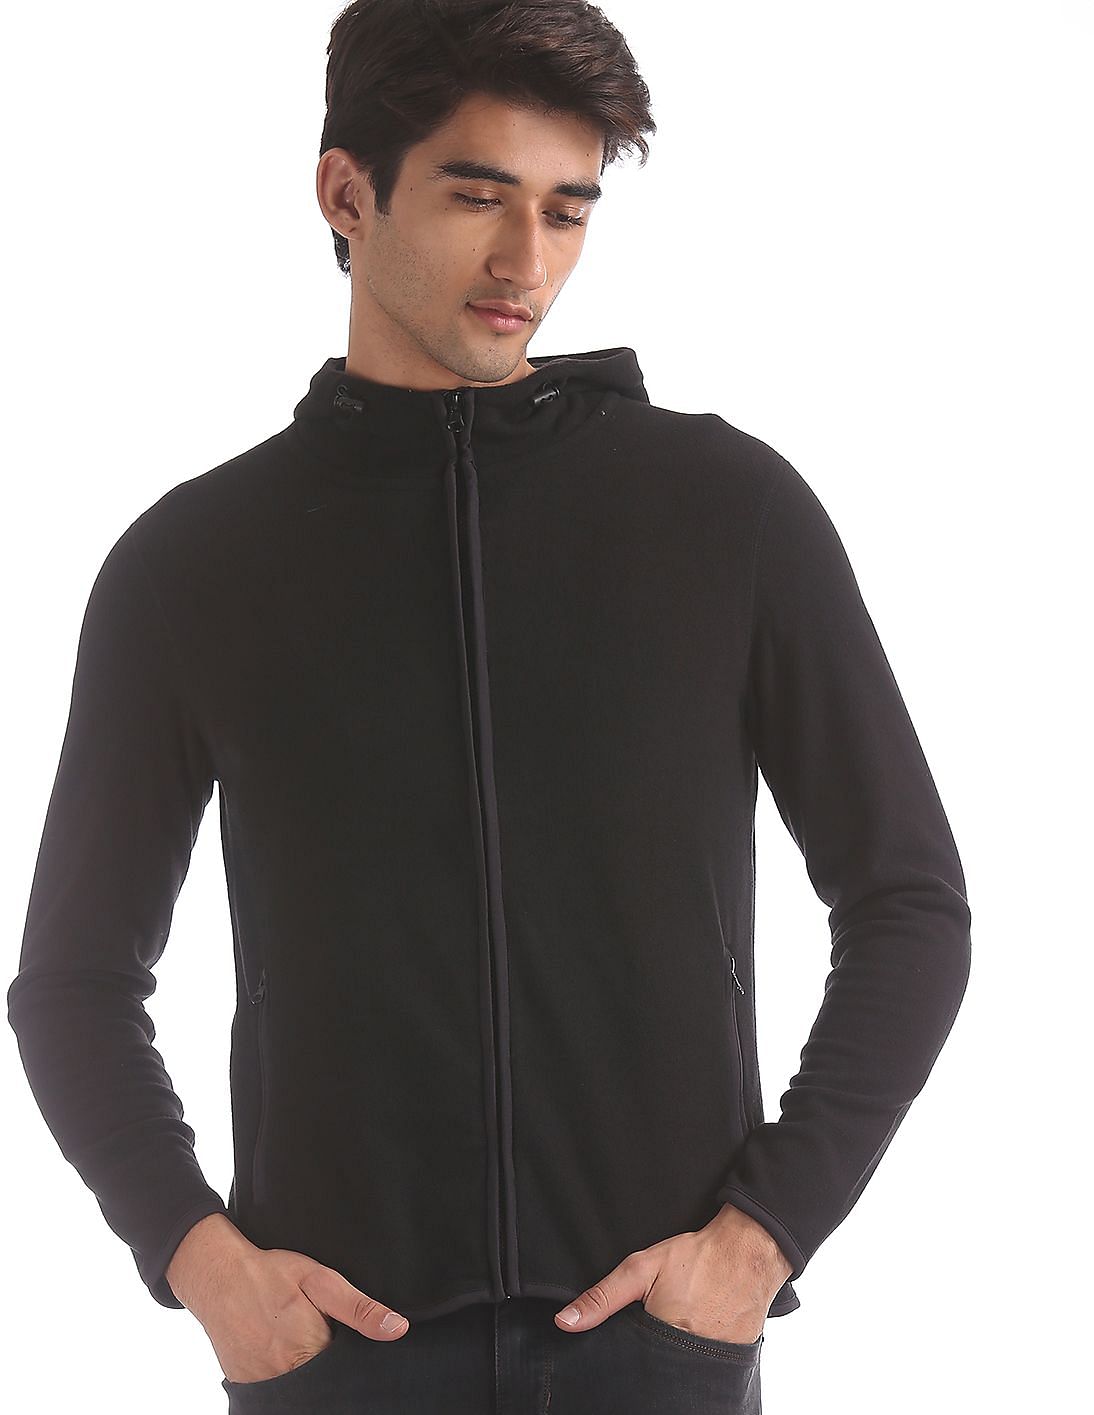 Buy Men Black Hooded Solid Jacket online at NNNOW.com